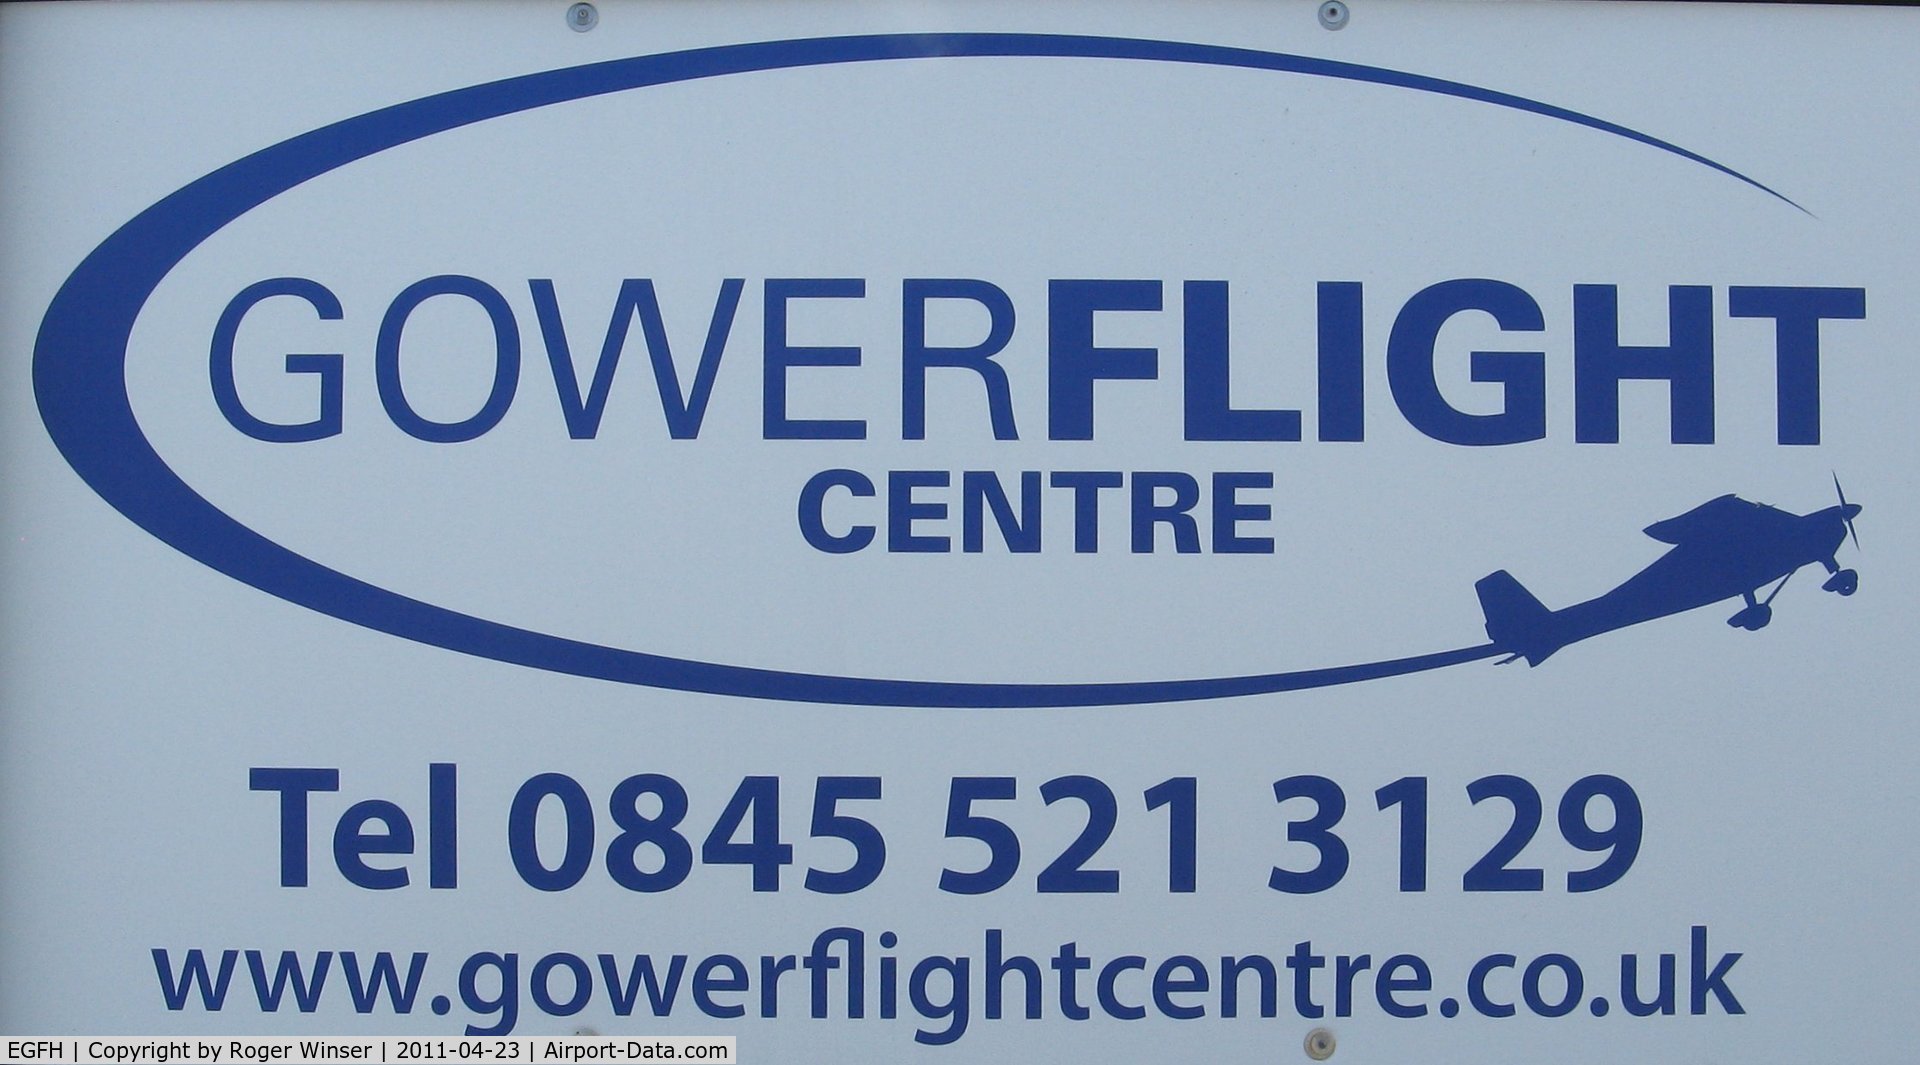 Swansea Airport, Swansea, Wales United Kingdom (EGFH) - Swansea Airport based Gower Flight Centre logo